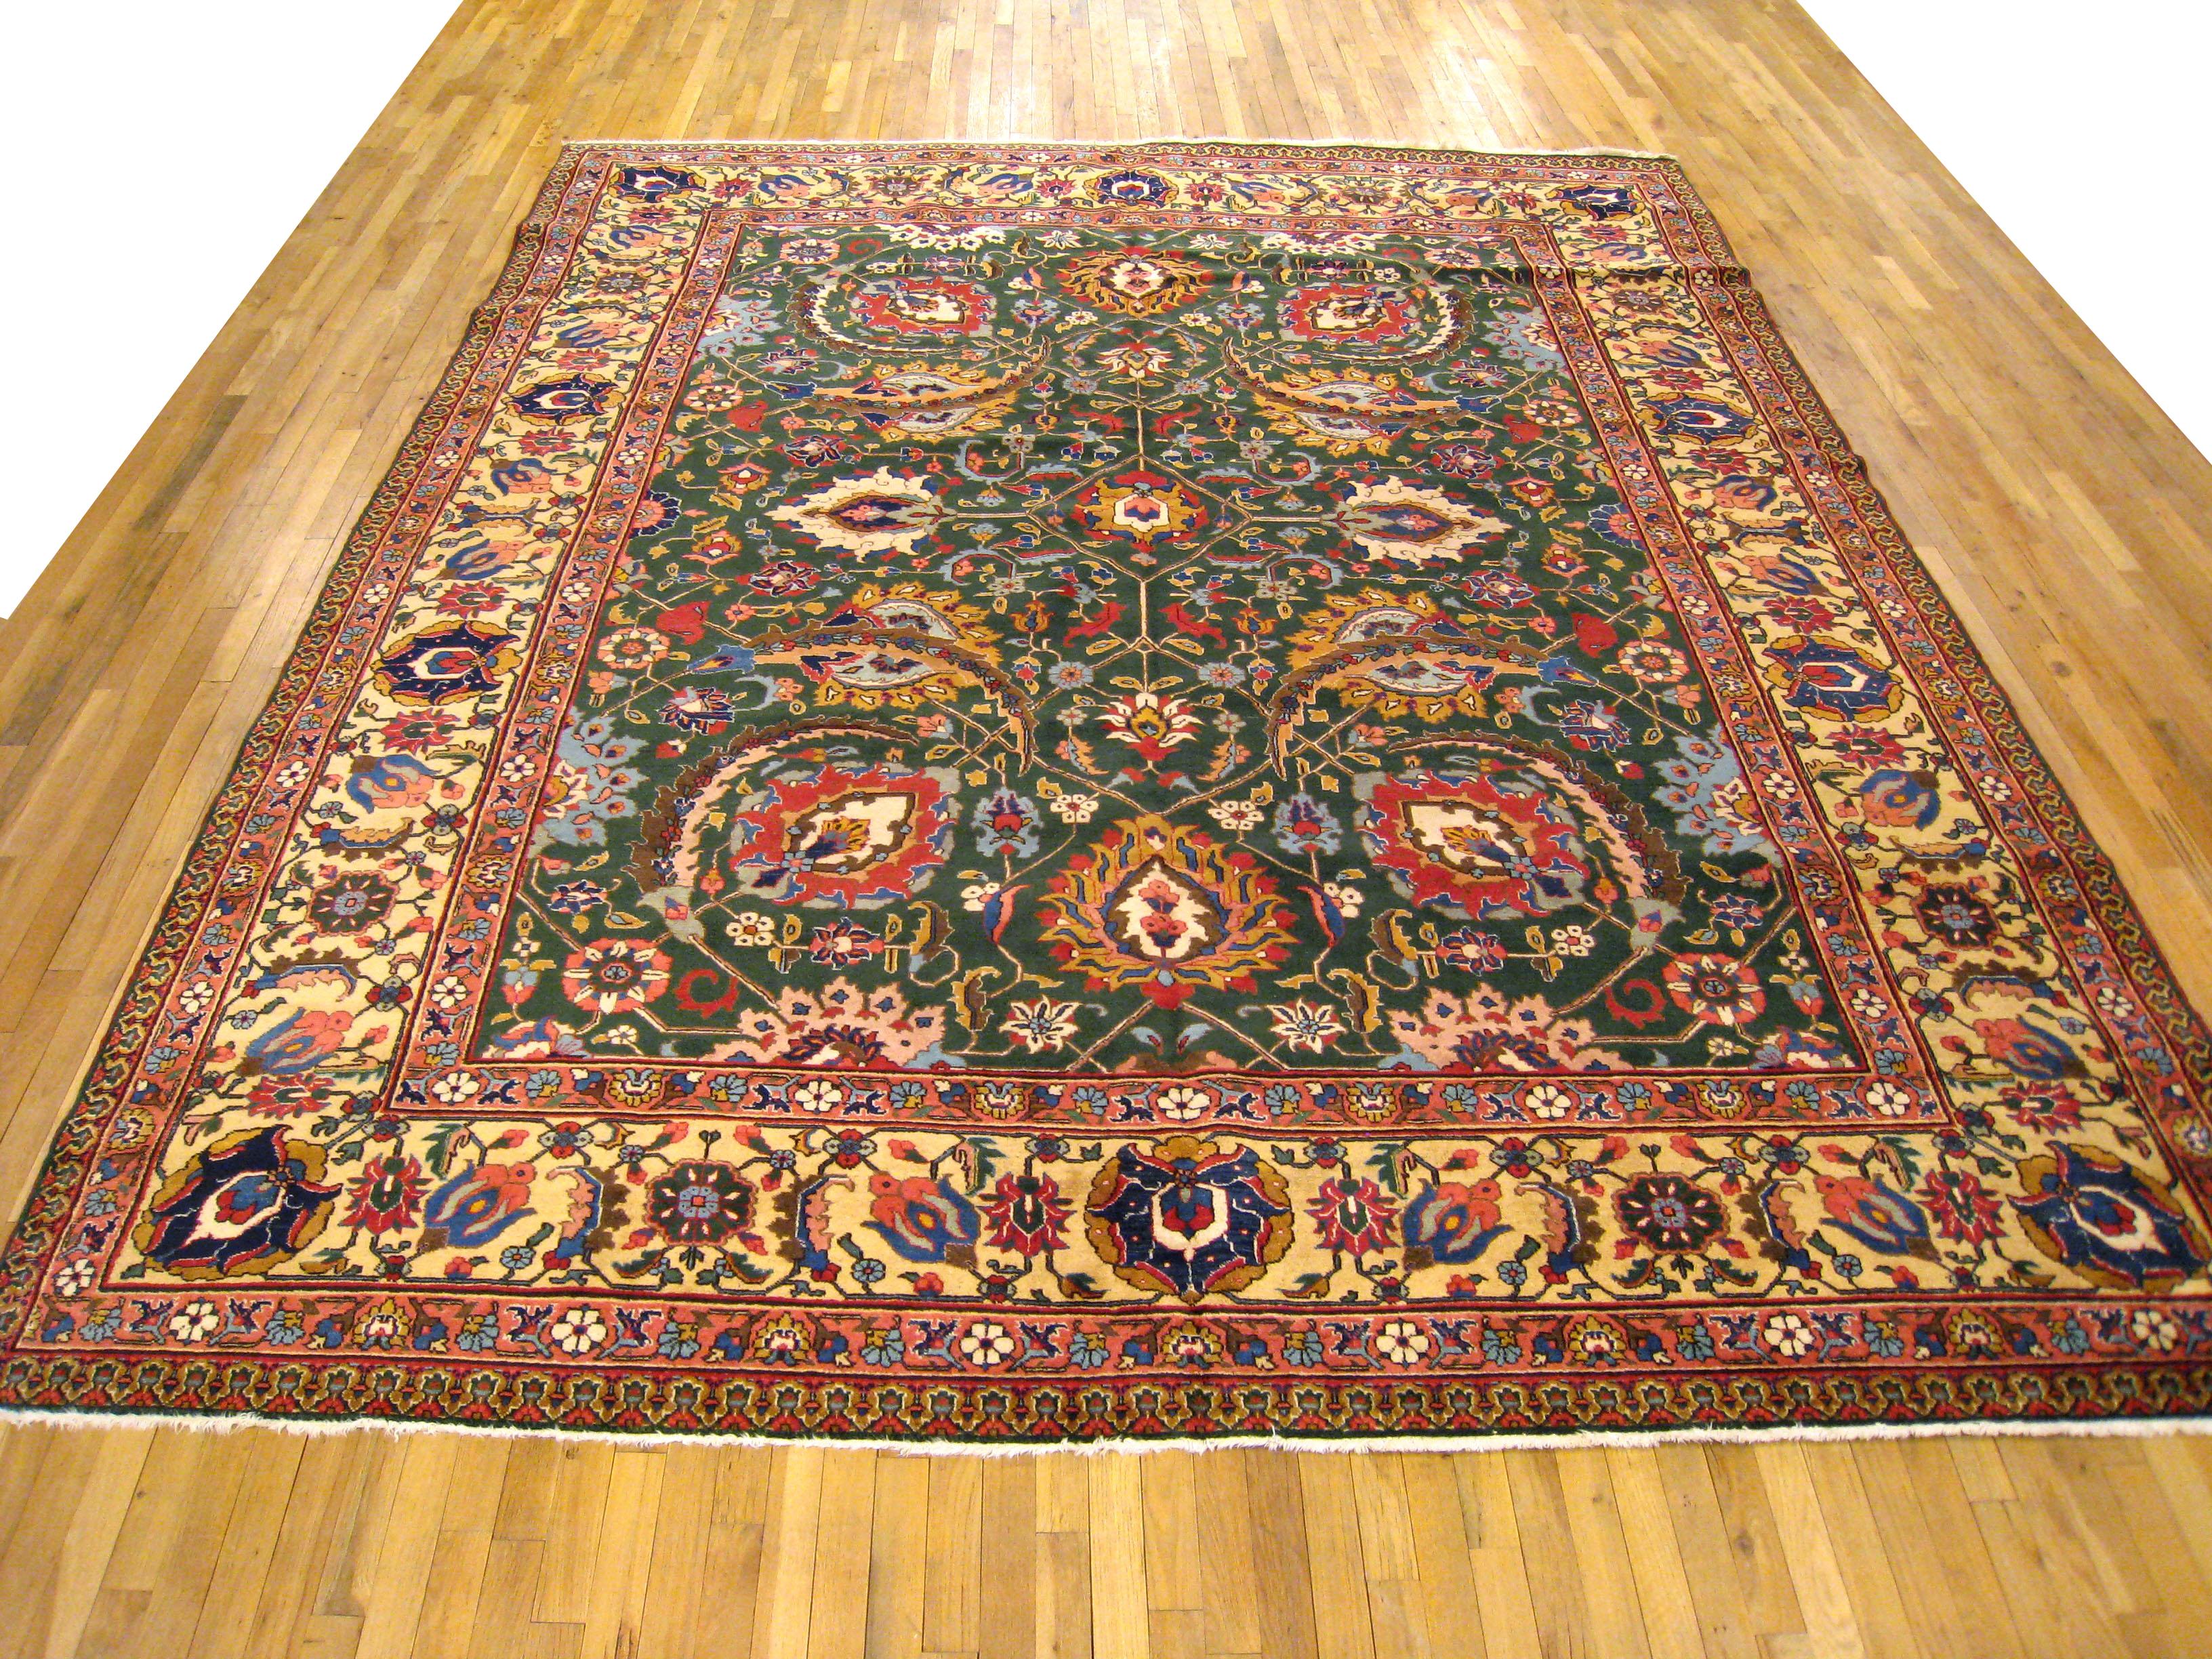 Vintage Persian Tabriz oriental carpet, circa 1940, room sized

A vintage Persian Tabriz oriental carpet, circa 1940. Size: 12'0